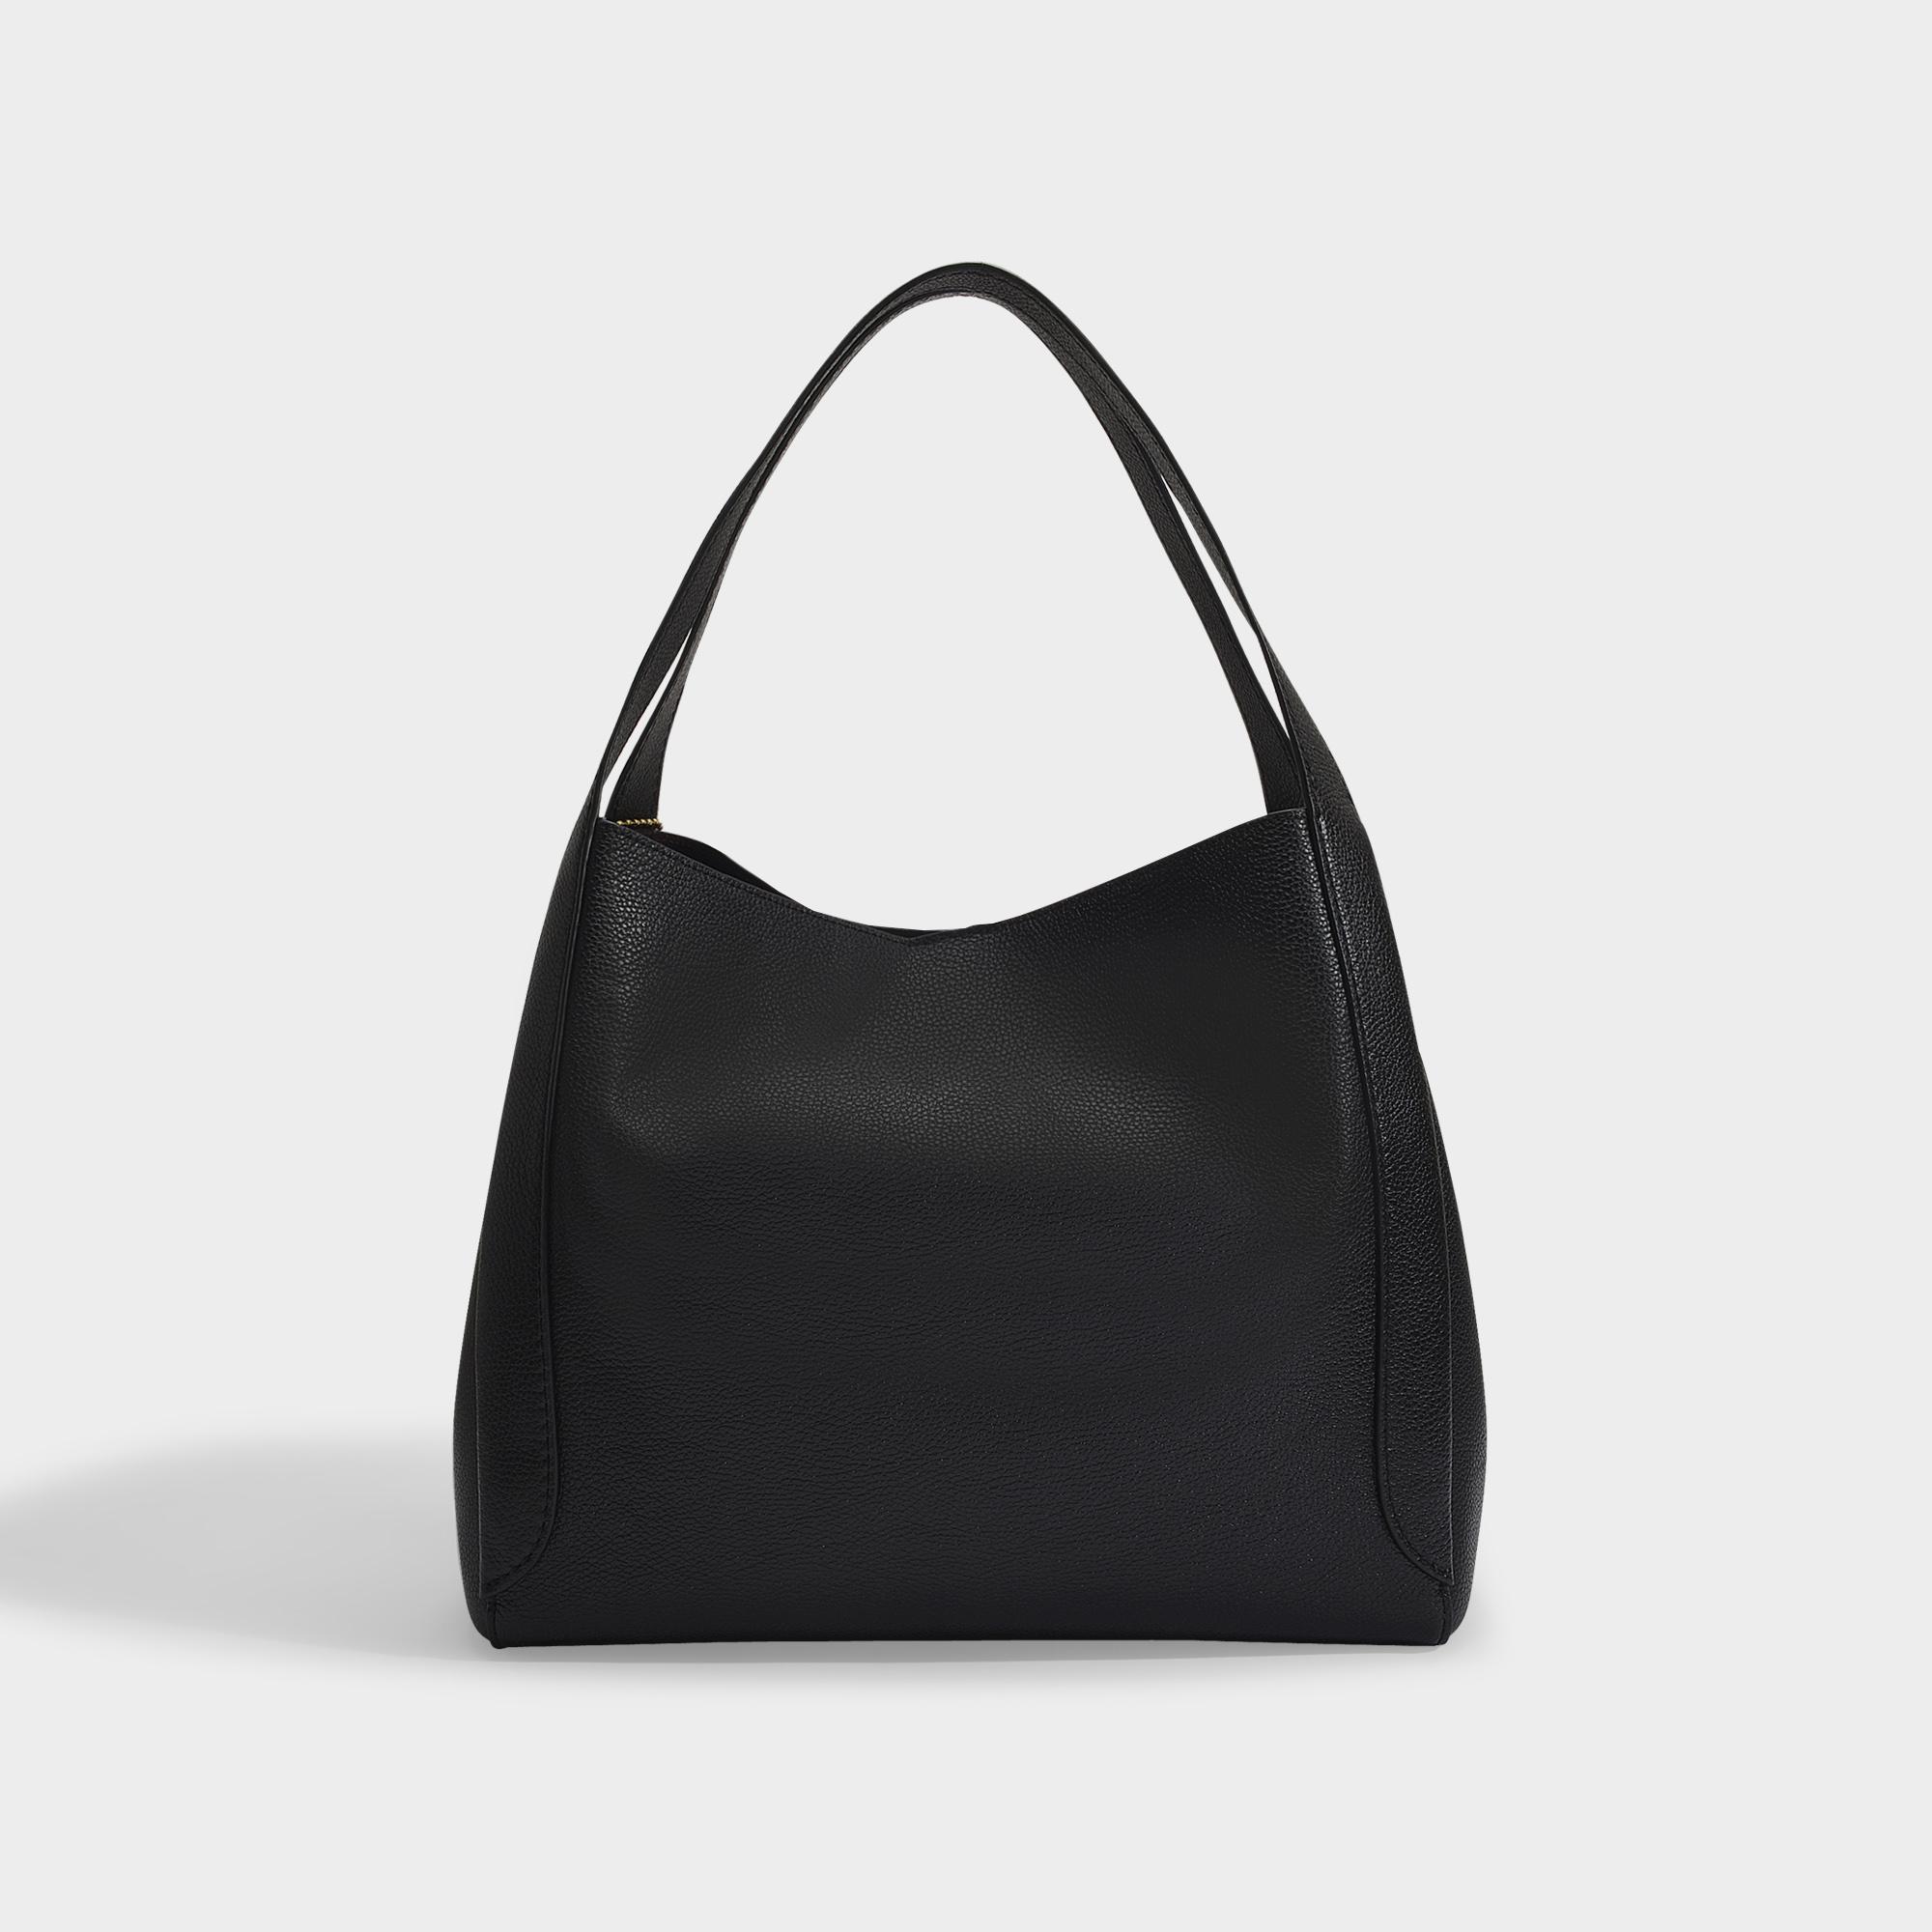 COACH Hadley Hobo Bag In Black Leather - Lyst